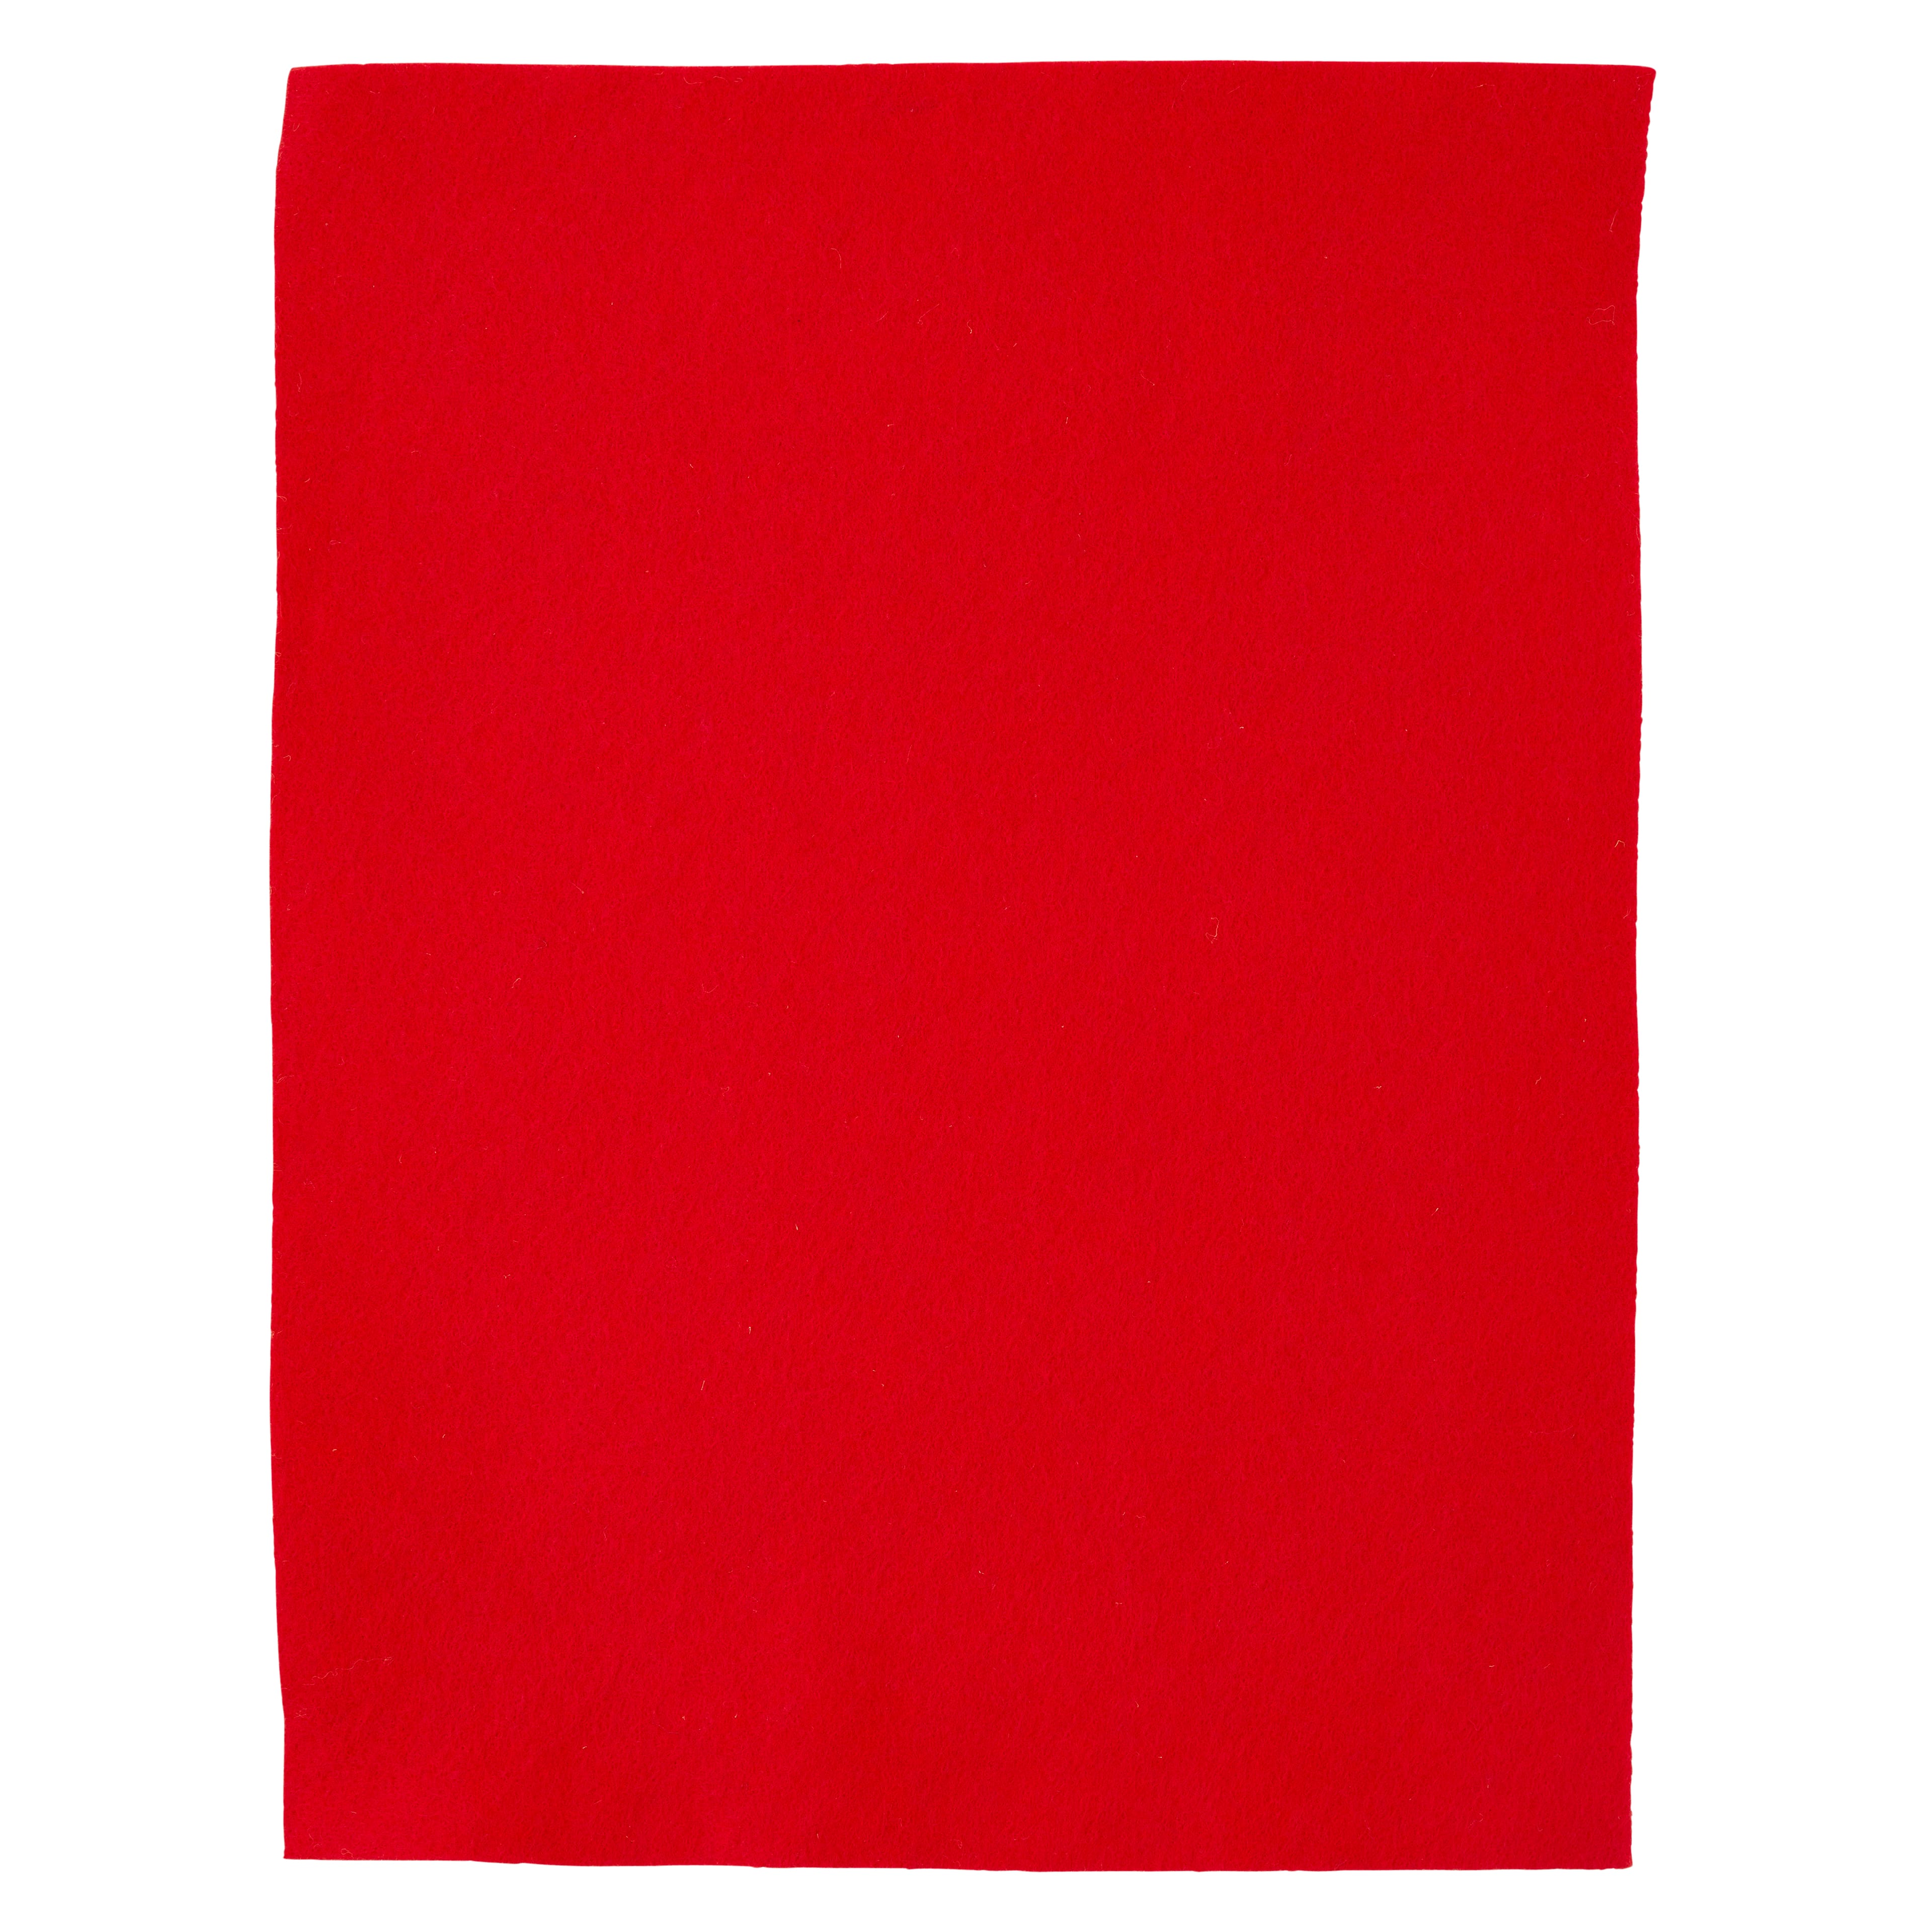 Make Shoppe Felt Sheet, 12 x 9, Inch Red